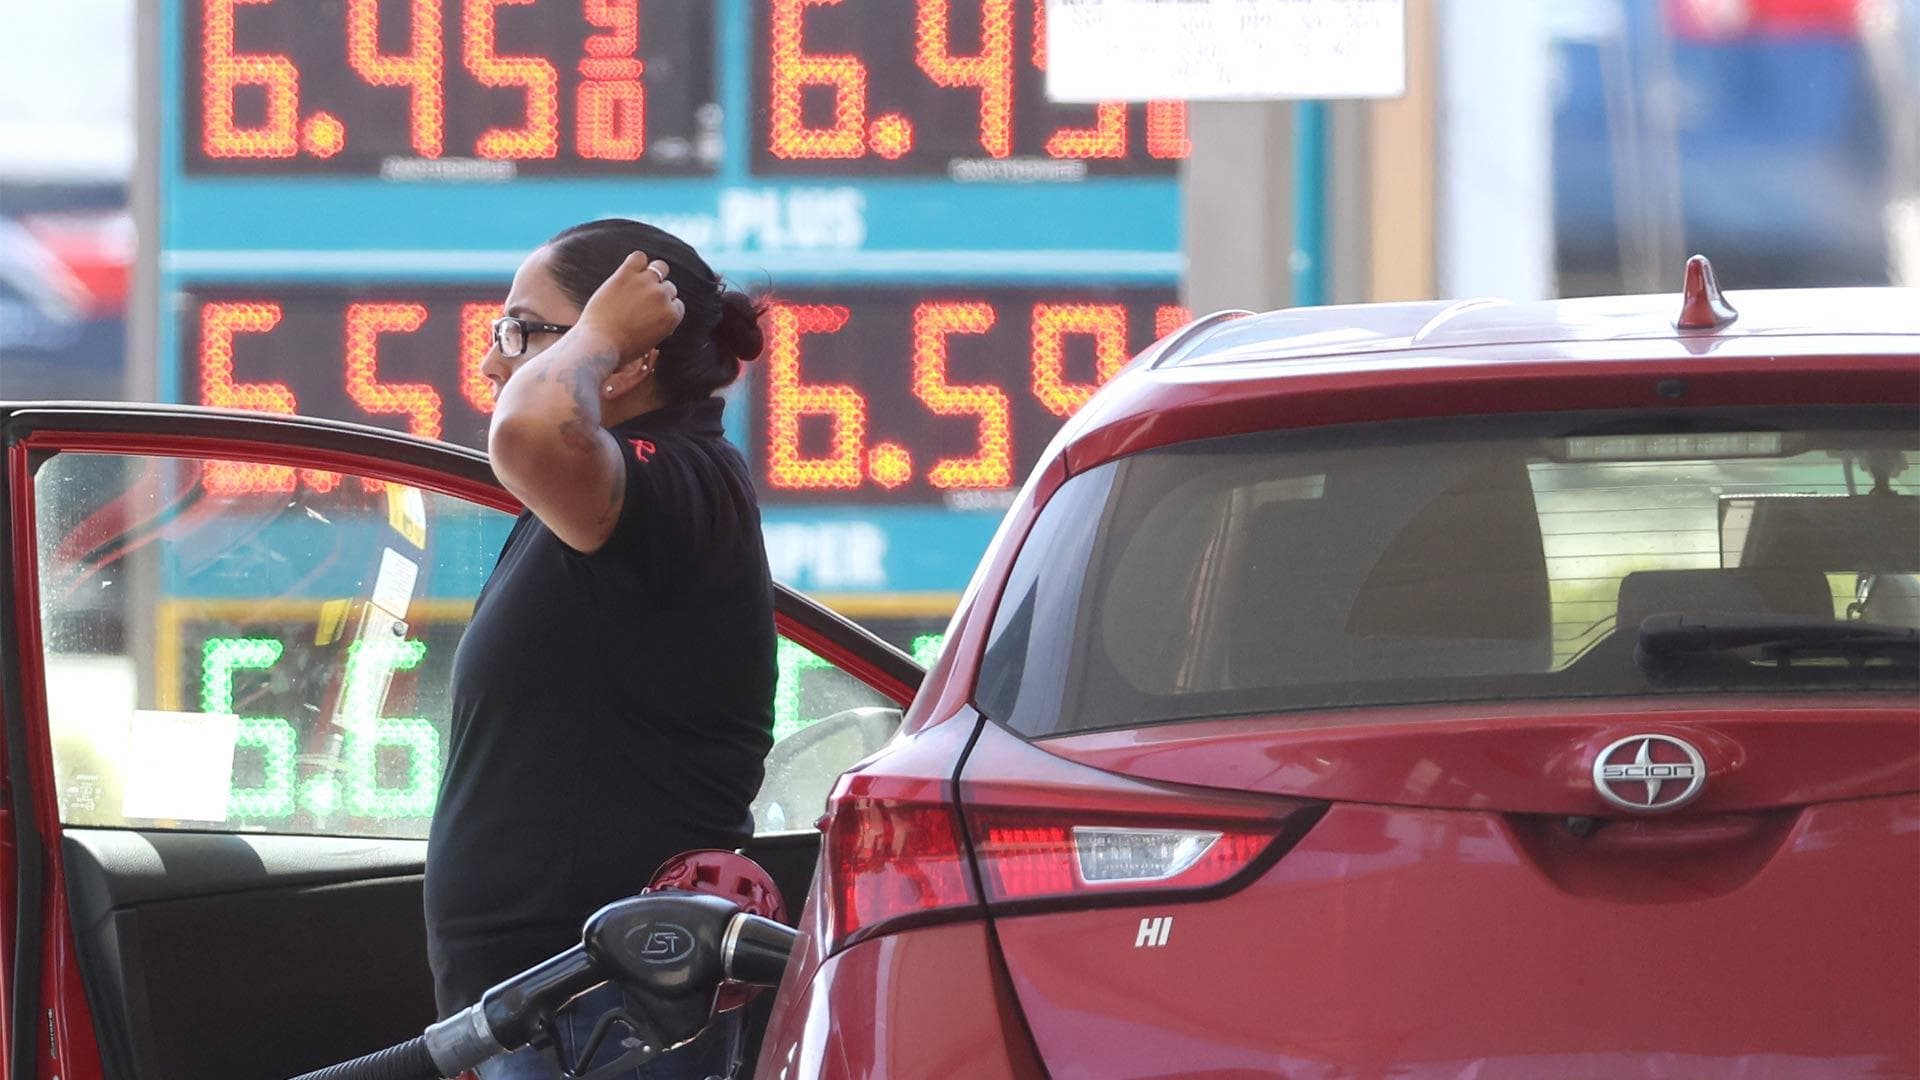 customer pumps gas into car